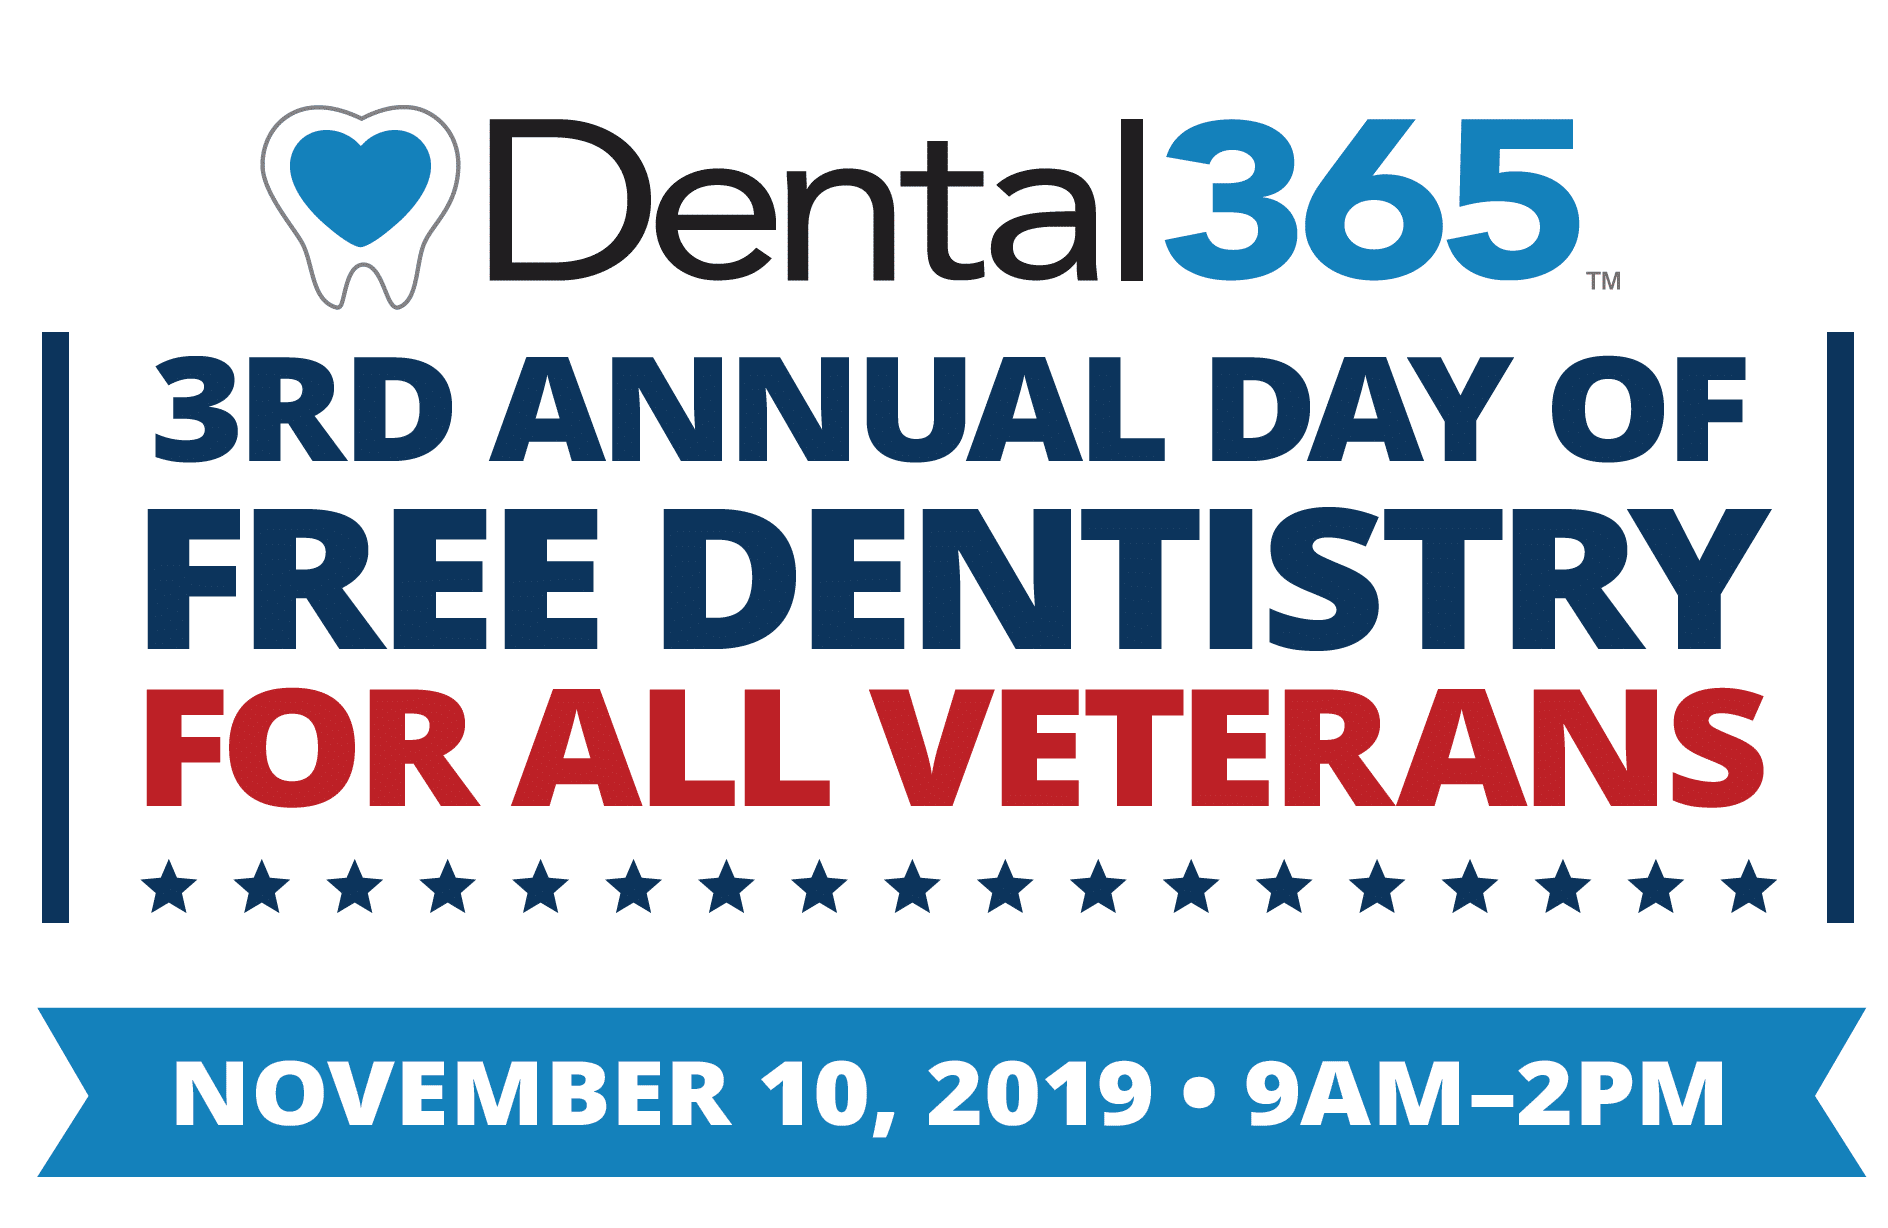 No Smile Left Behind—Dental365 Honors Veterans